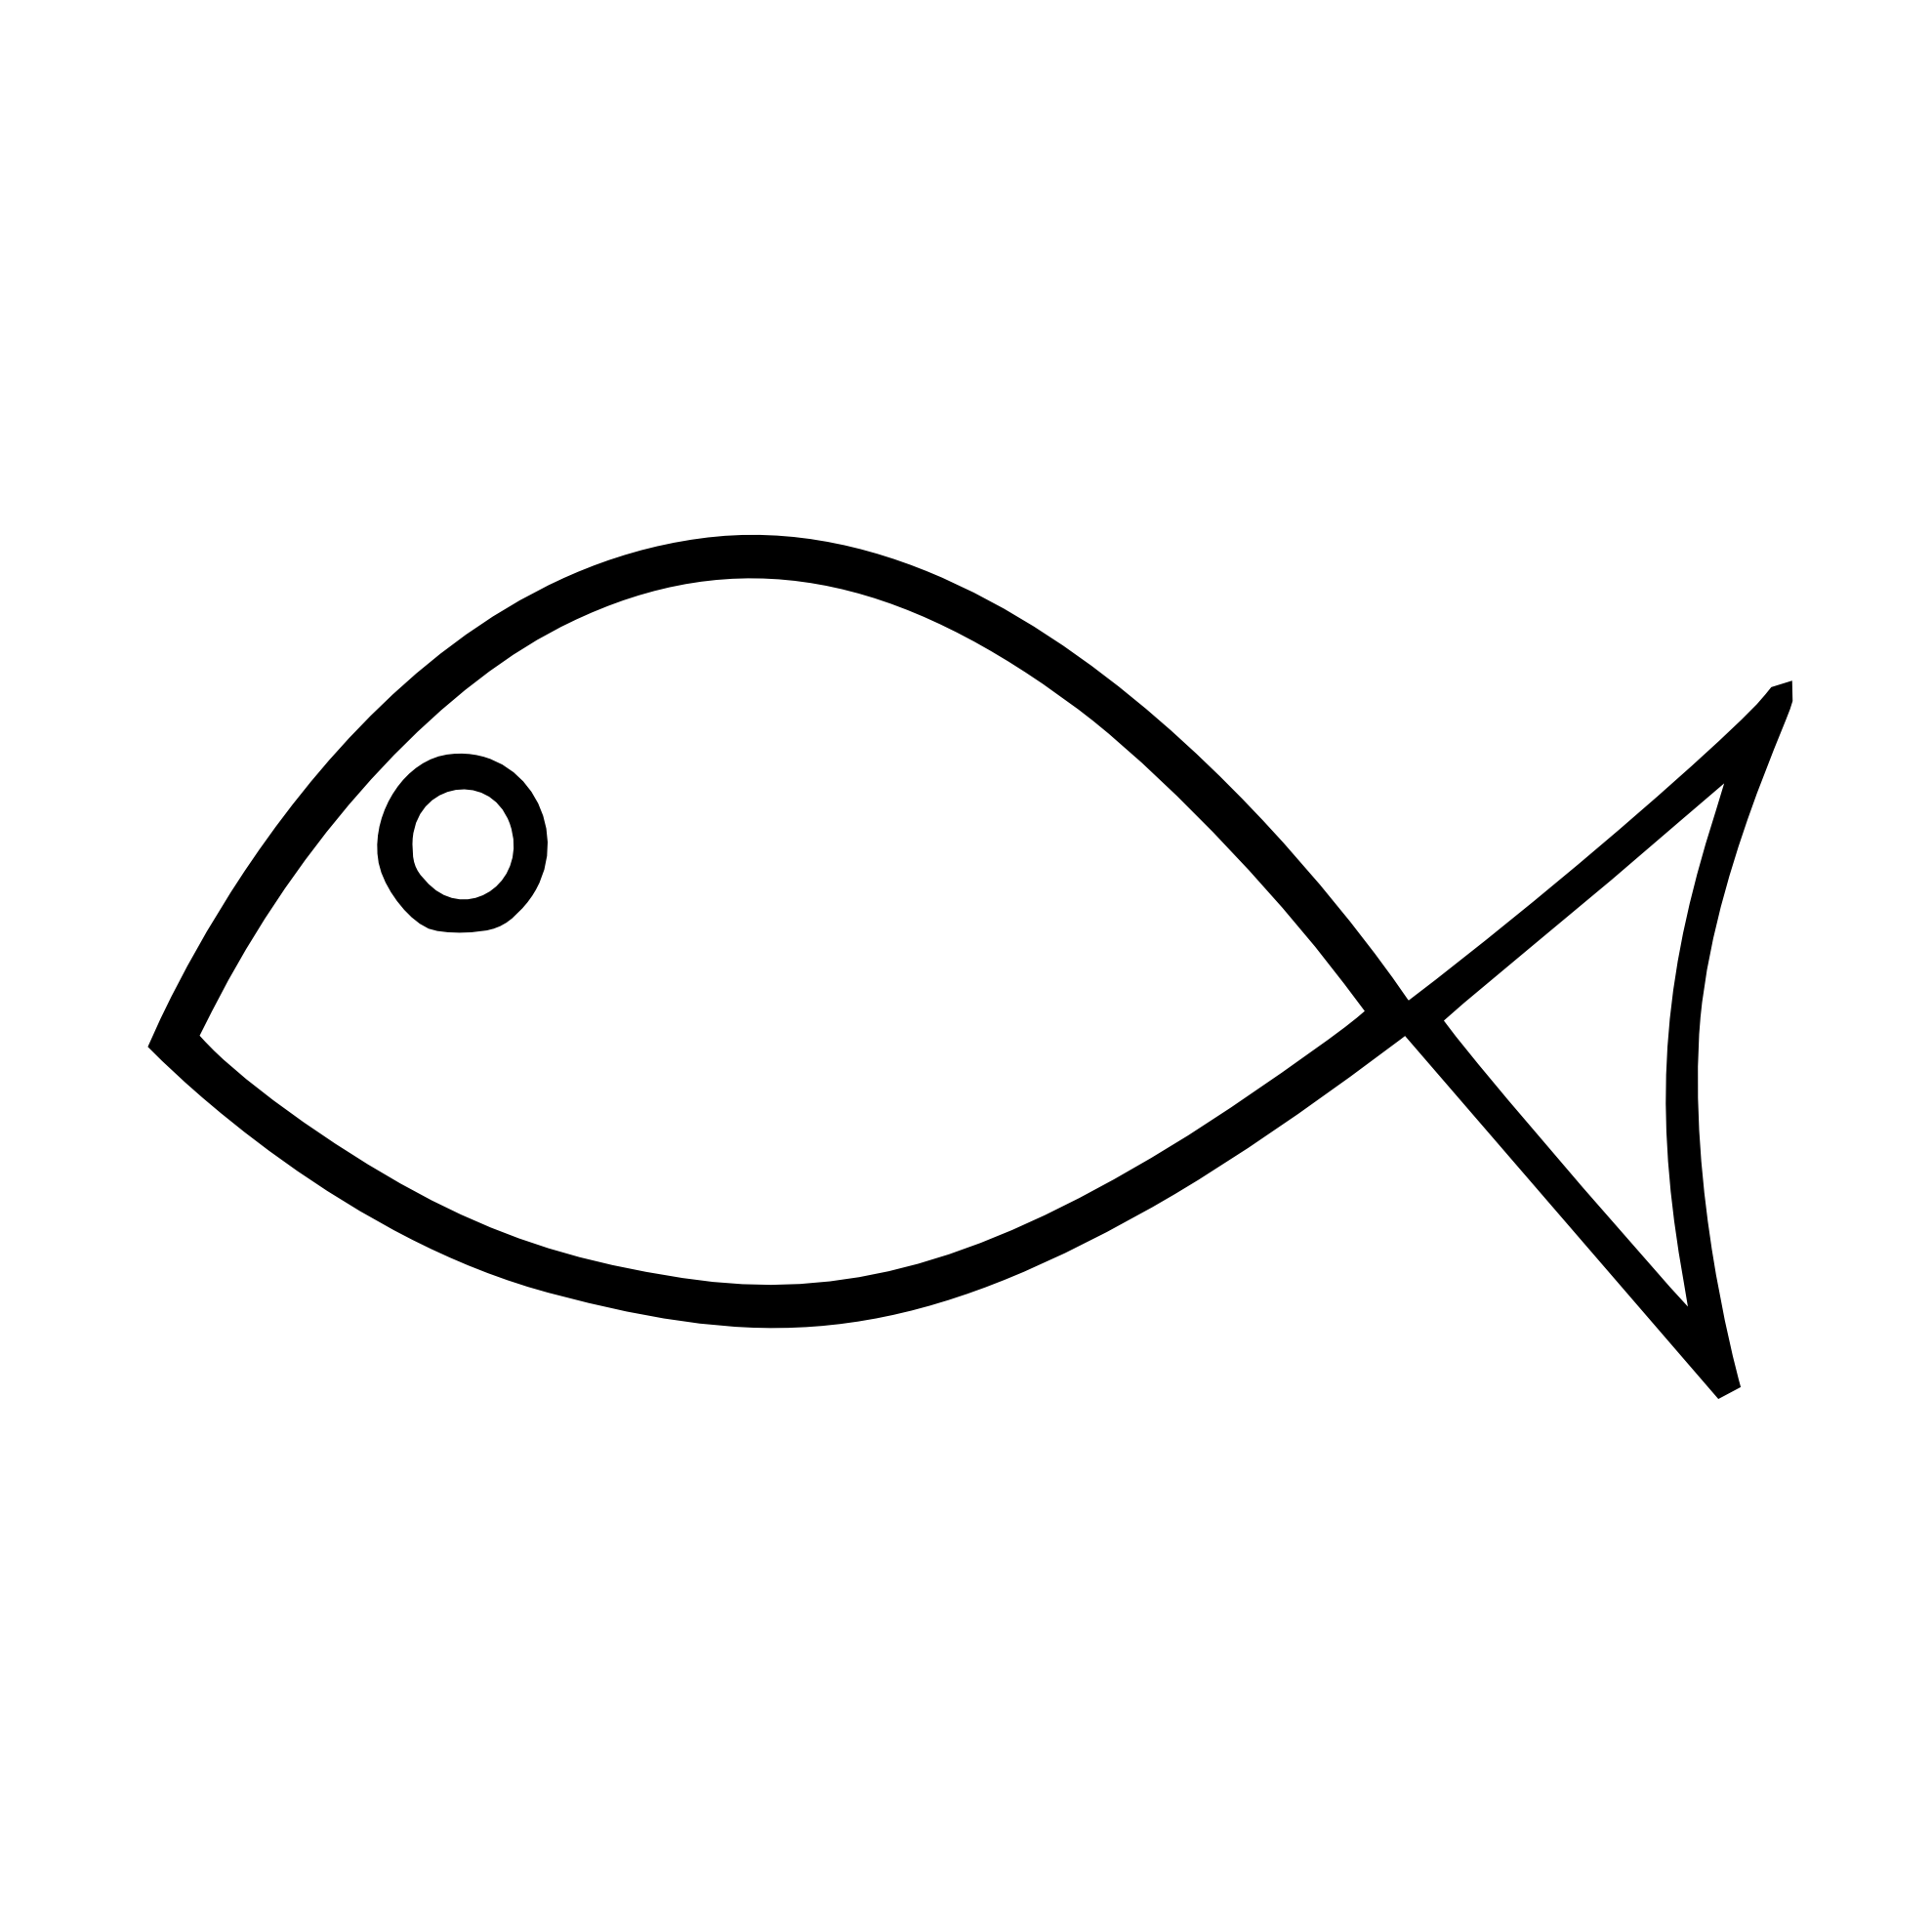 Fish Clip Art Black And White